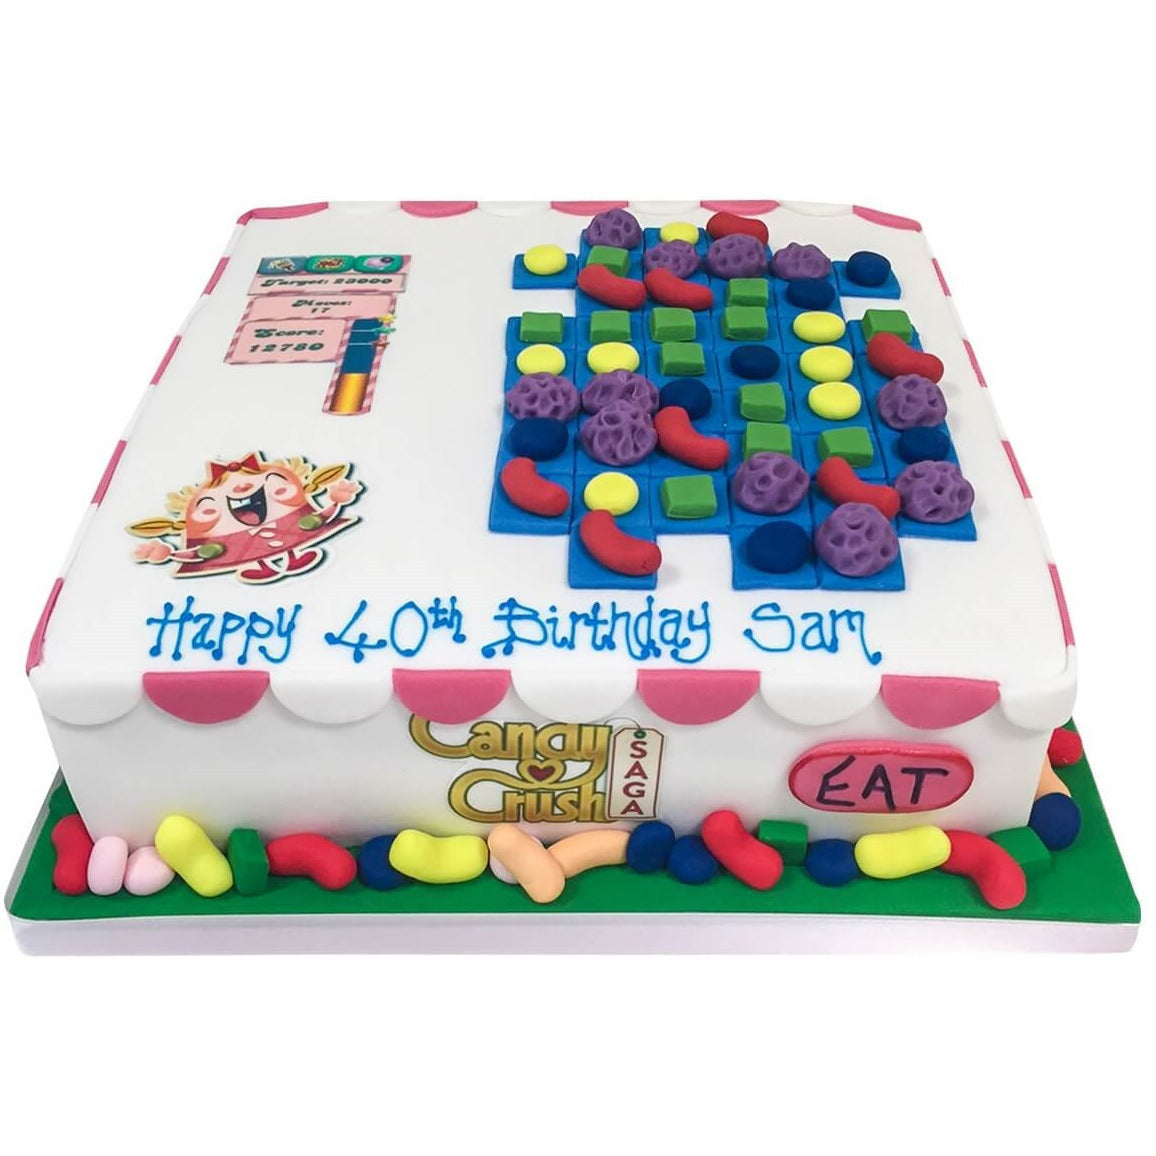 Happy 18th Birthday Skateboarder Sam !' - Decorated Cake - CakesDecor